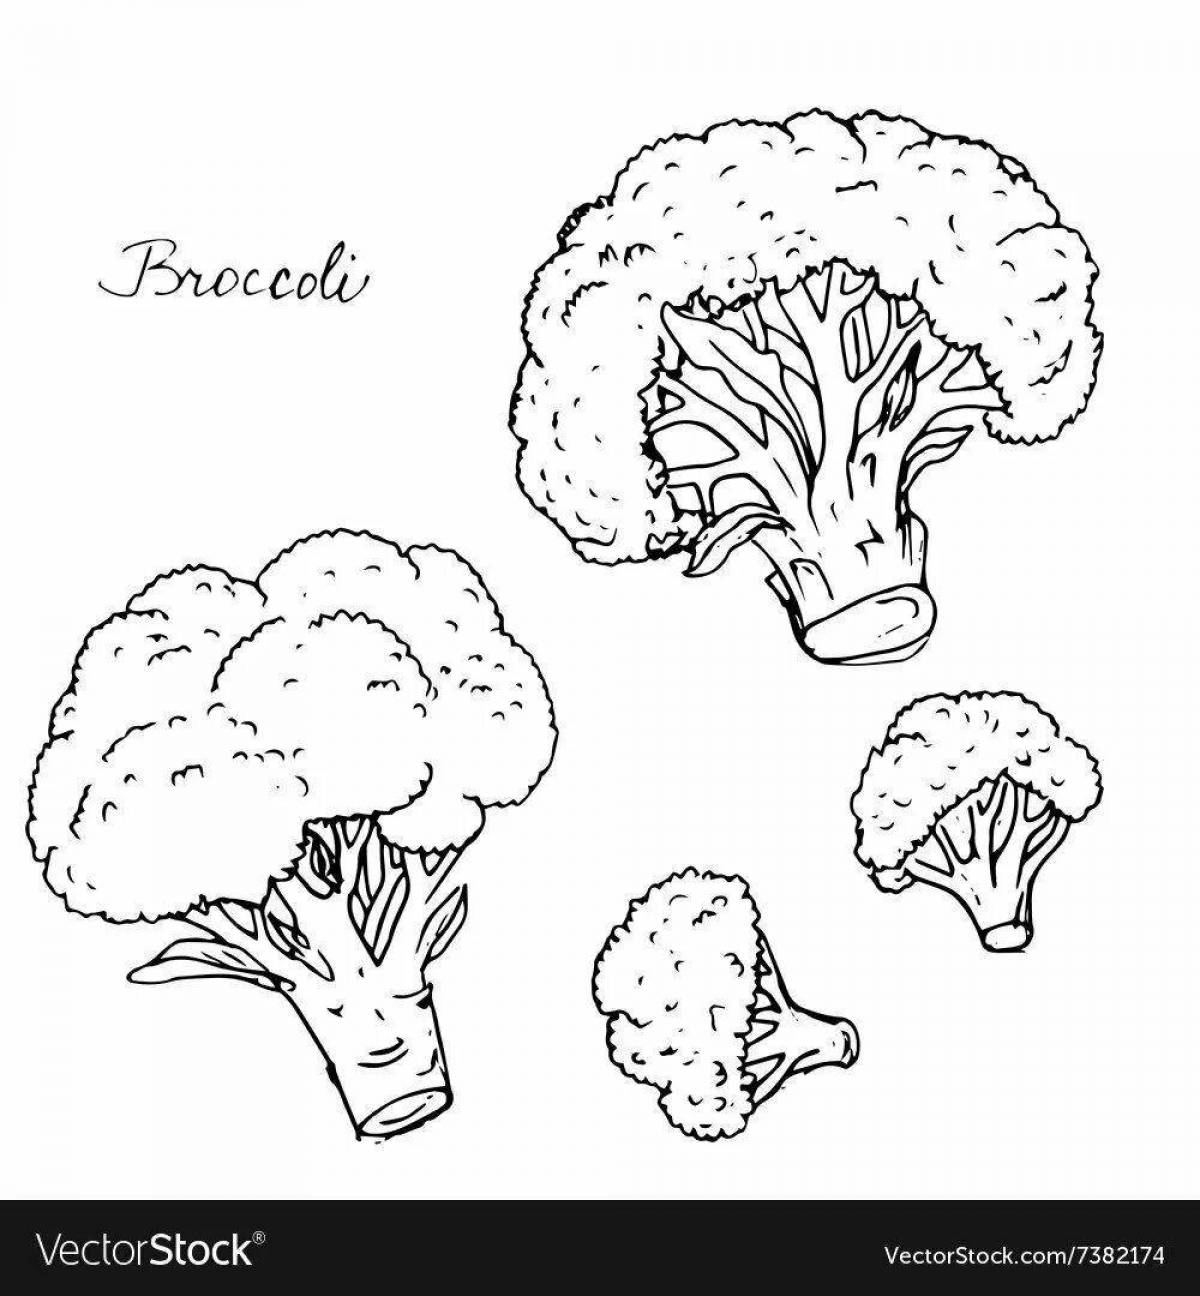 Broccoli for kids #11